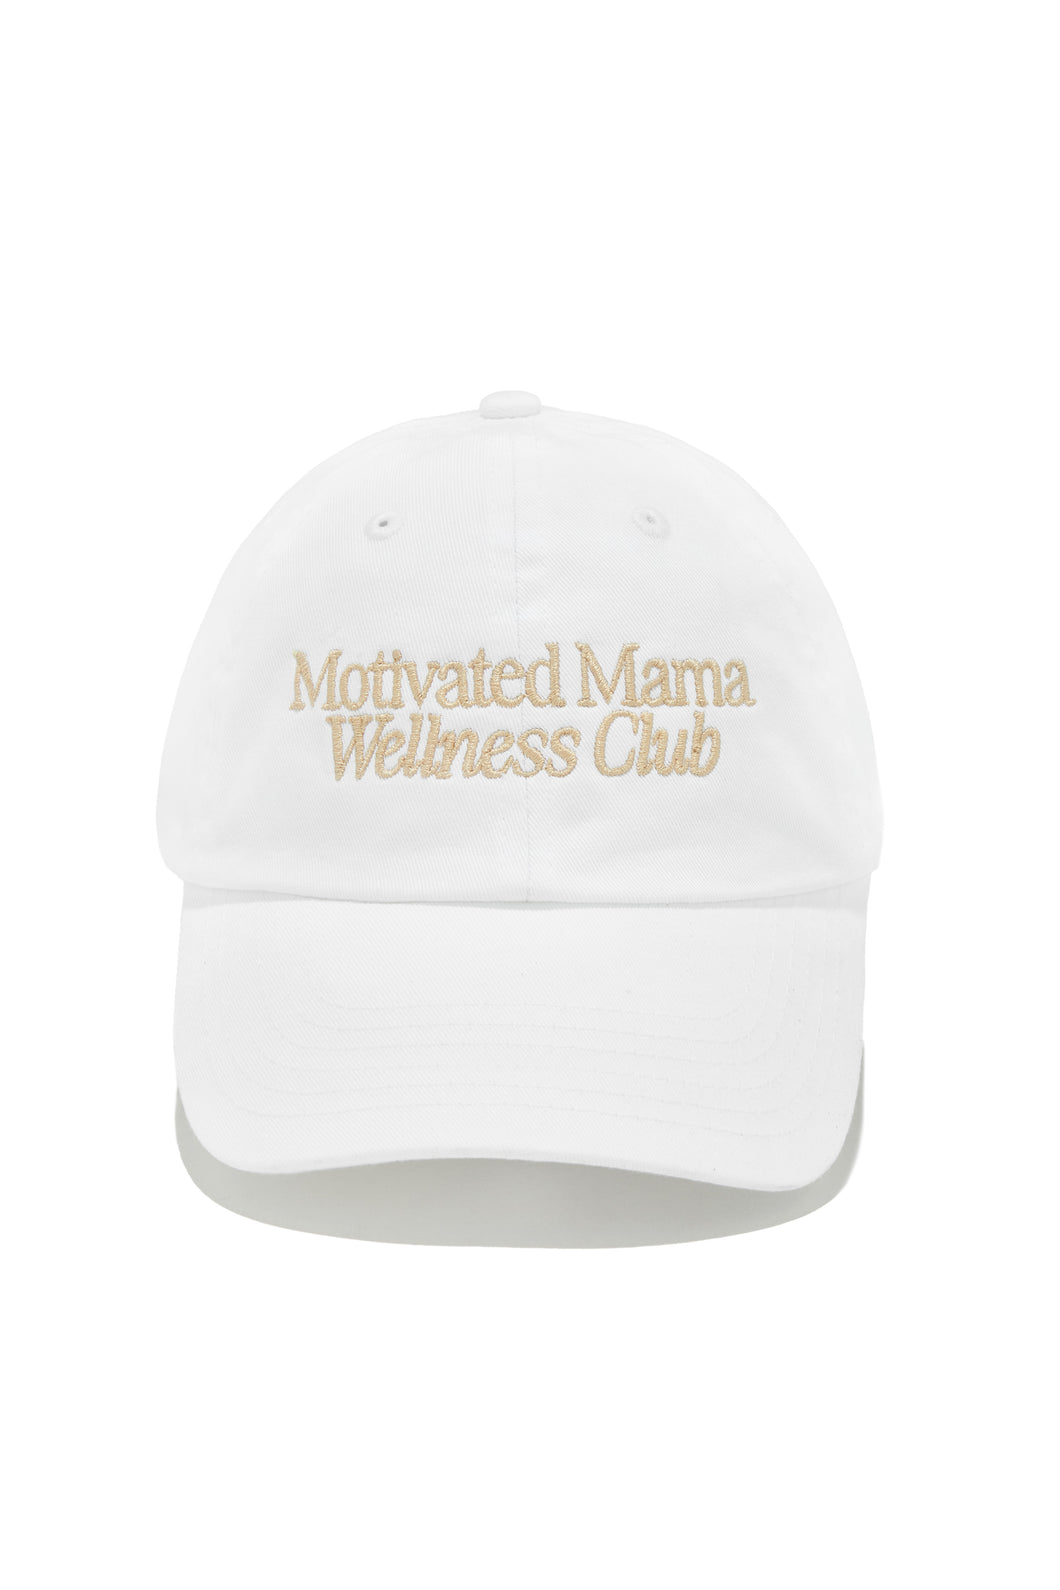 Motivated Mama Wellness Club Hat - Nude